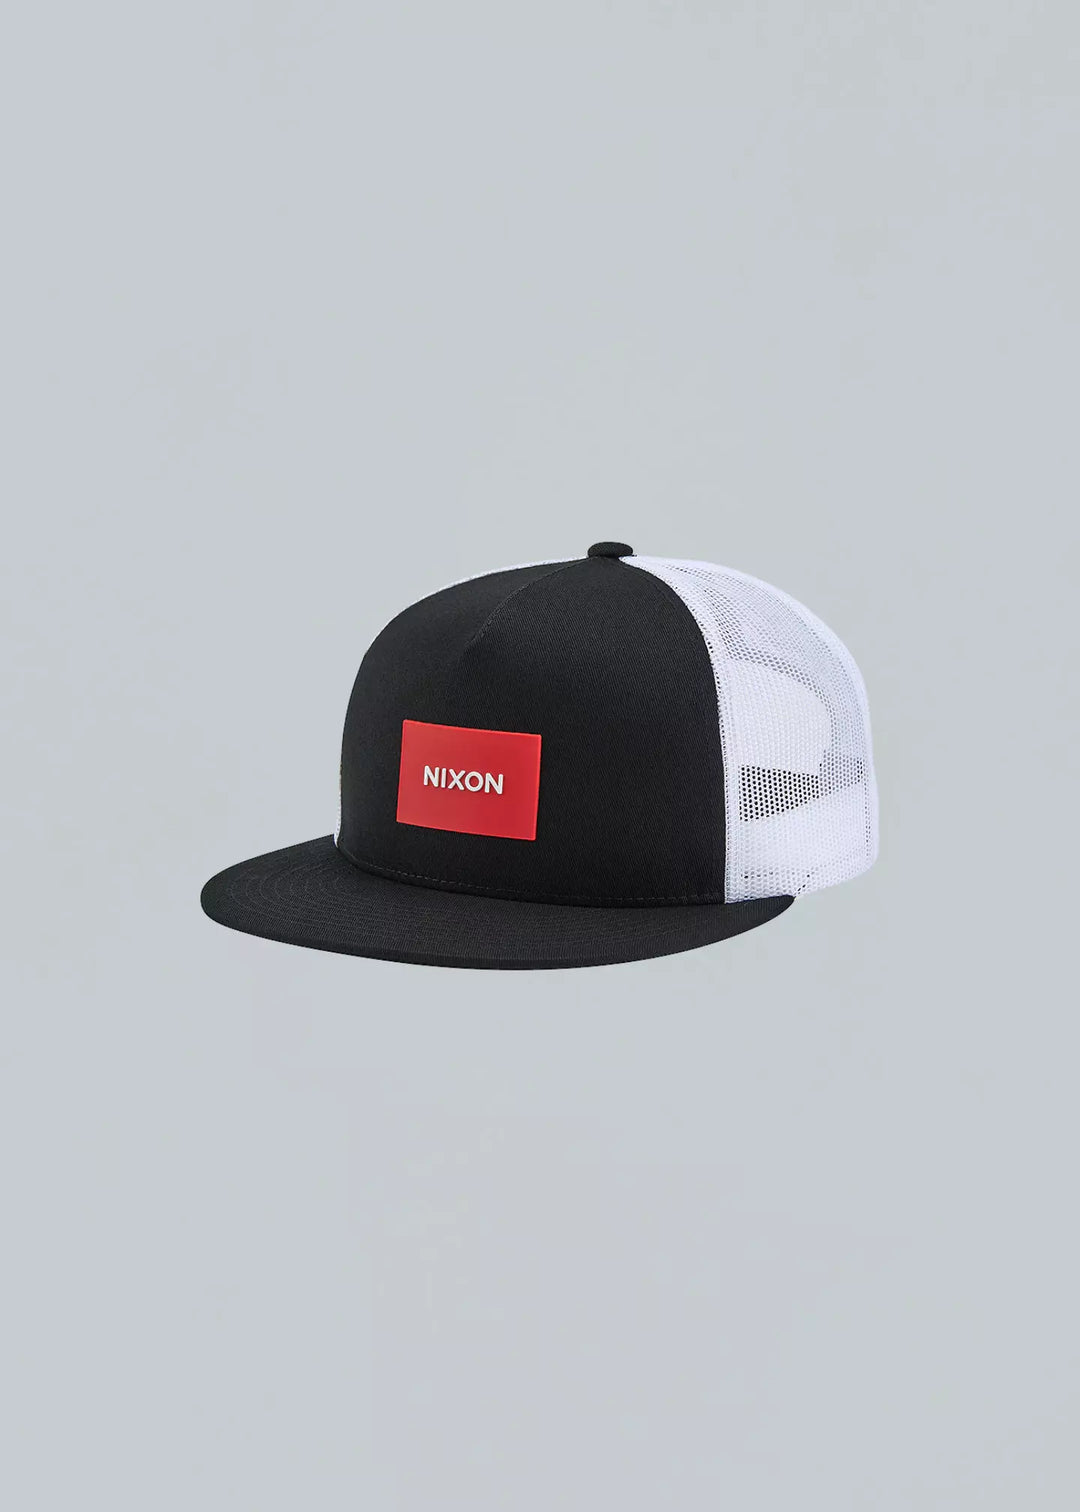 NIXON Team Trucker Hat Cap Black / Red / White